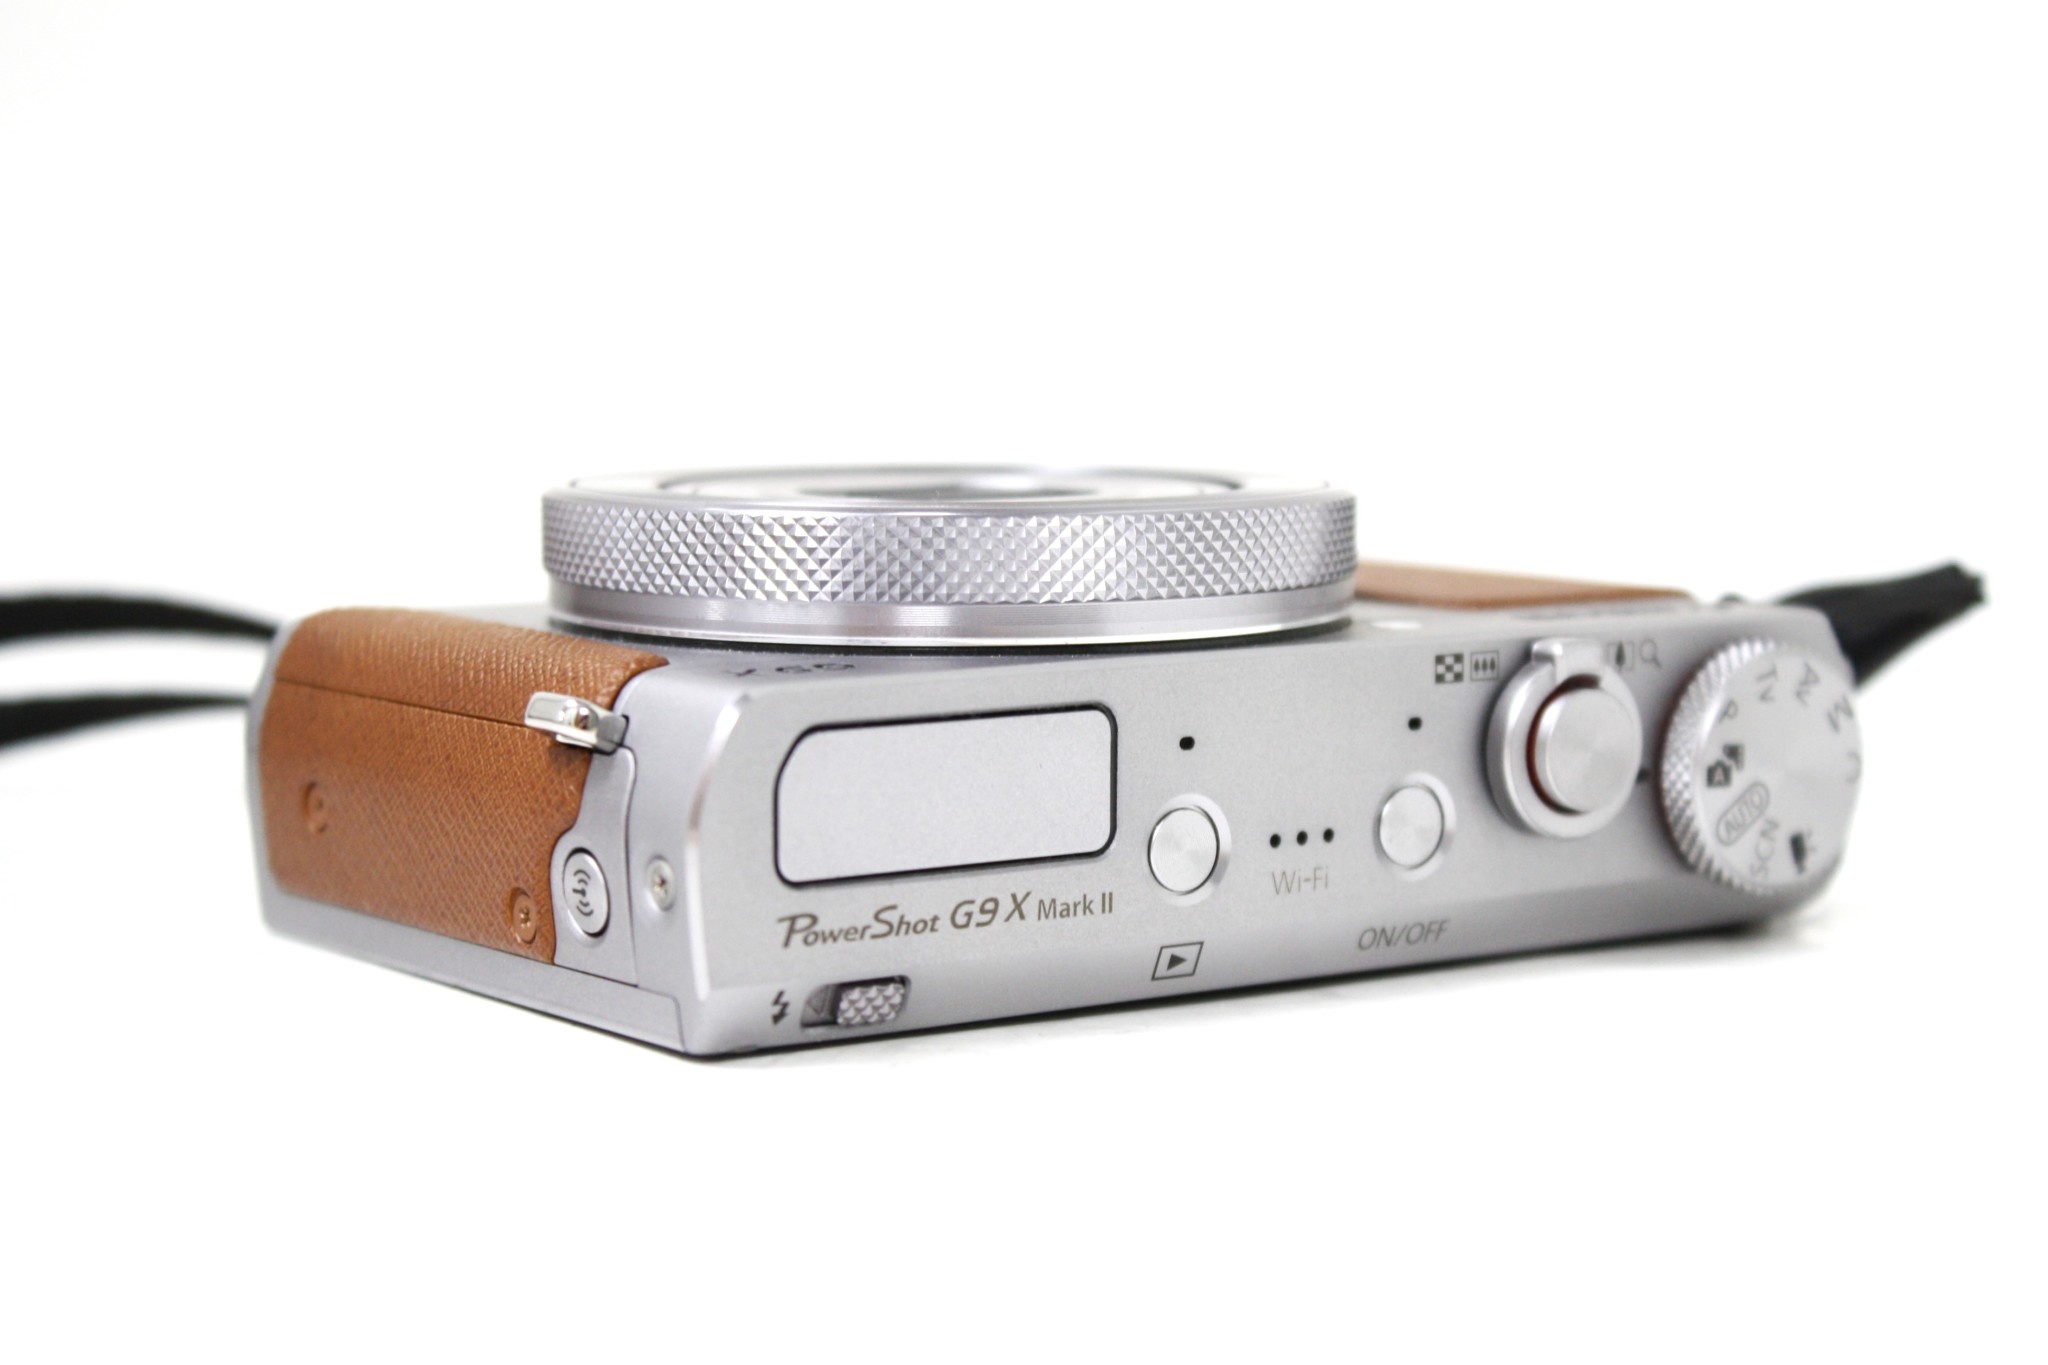 Near mint] Canon PowerShot G9X Mark II Digital Camera - Silver 